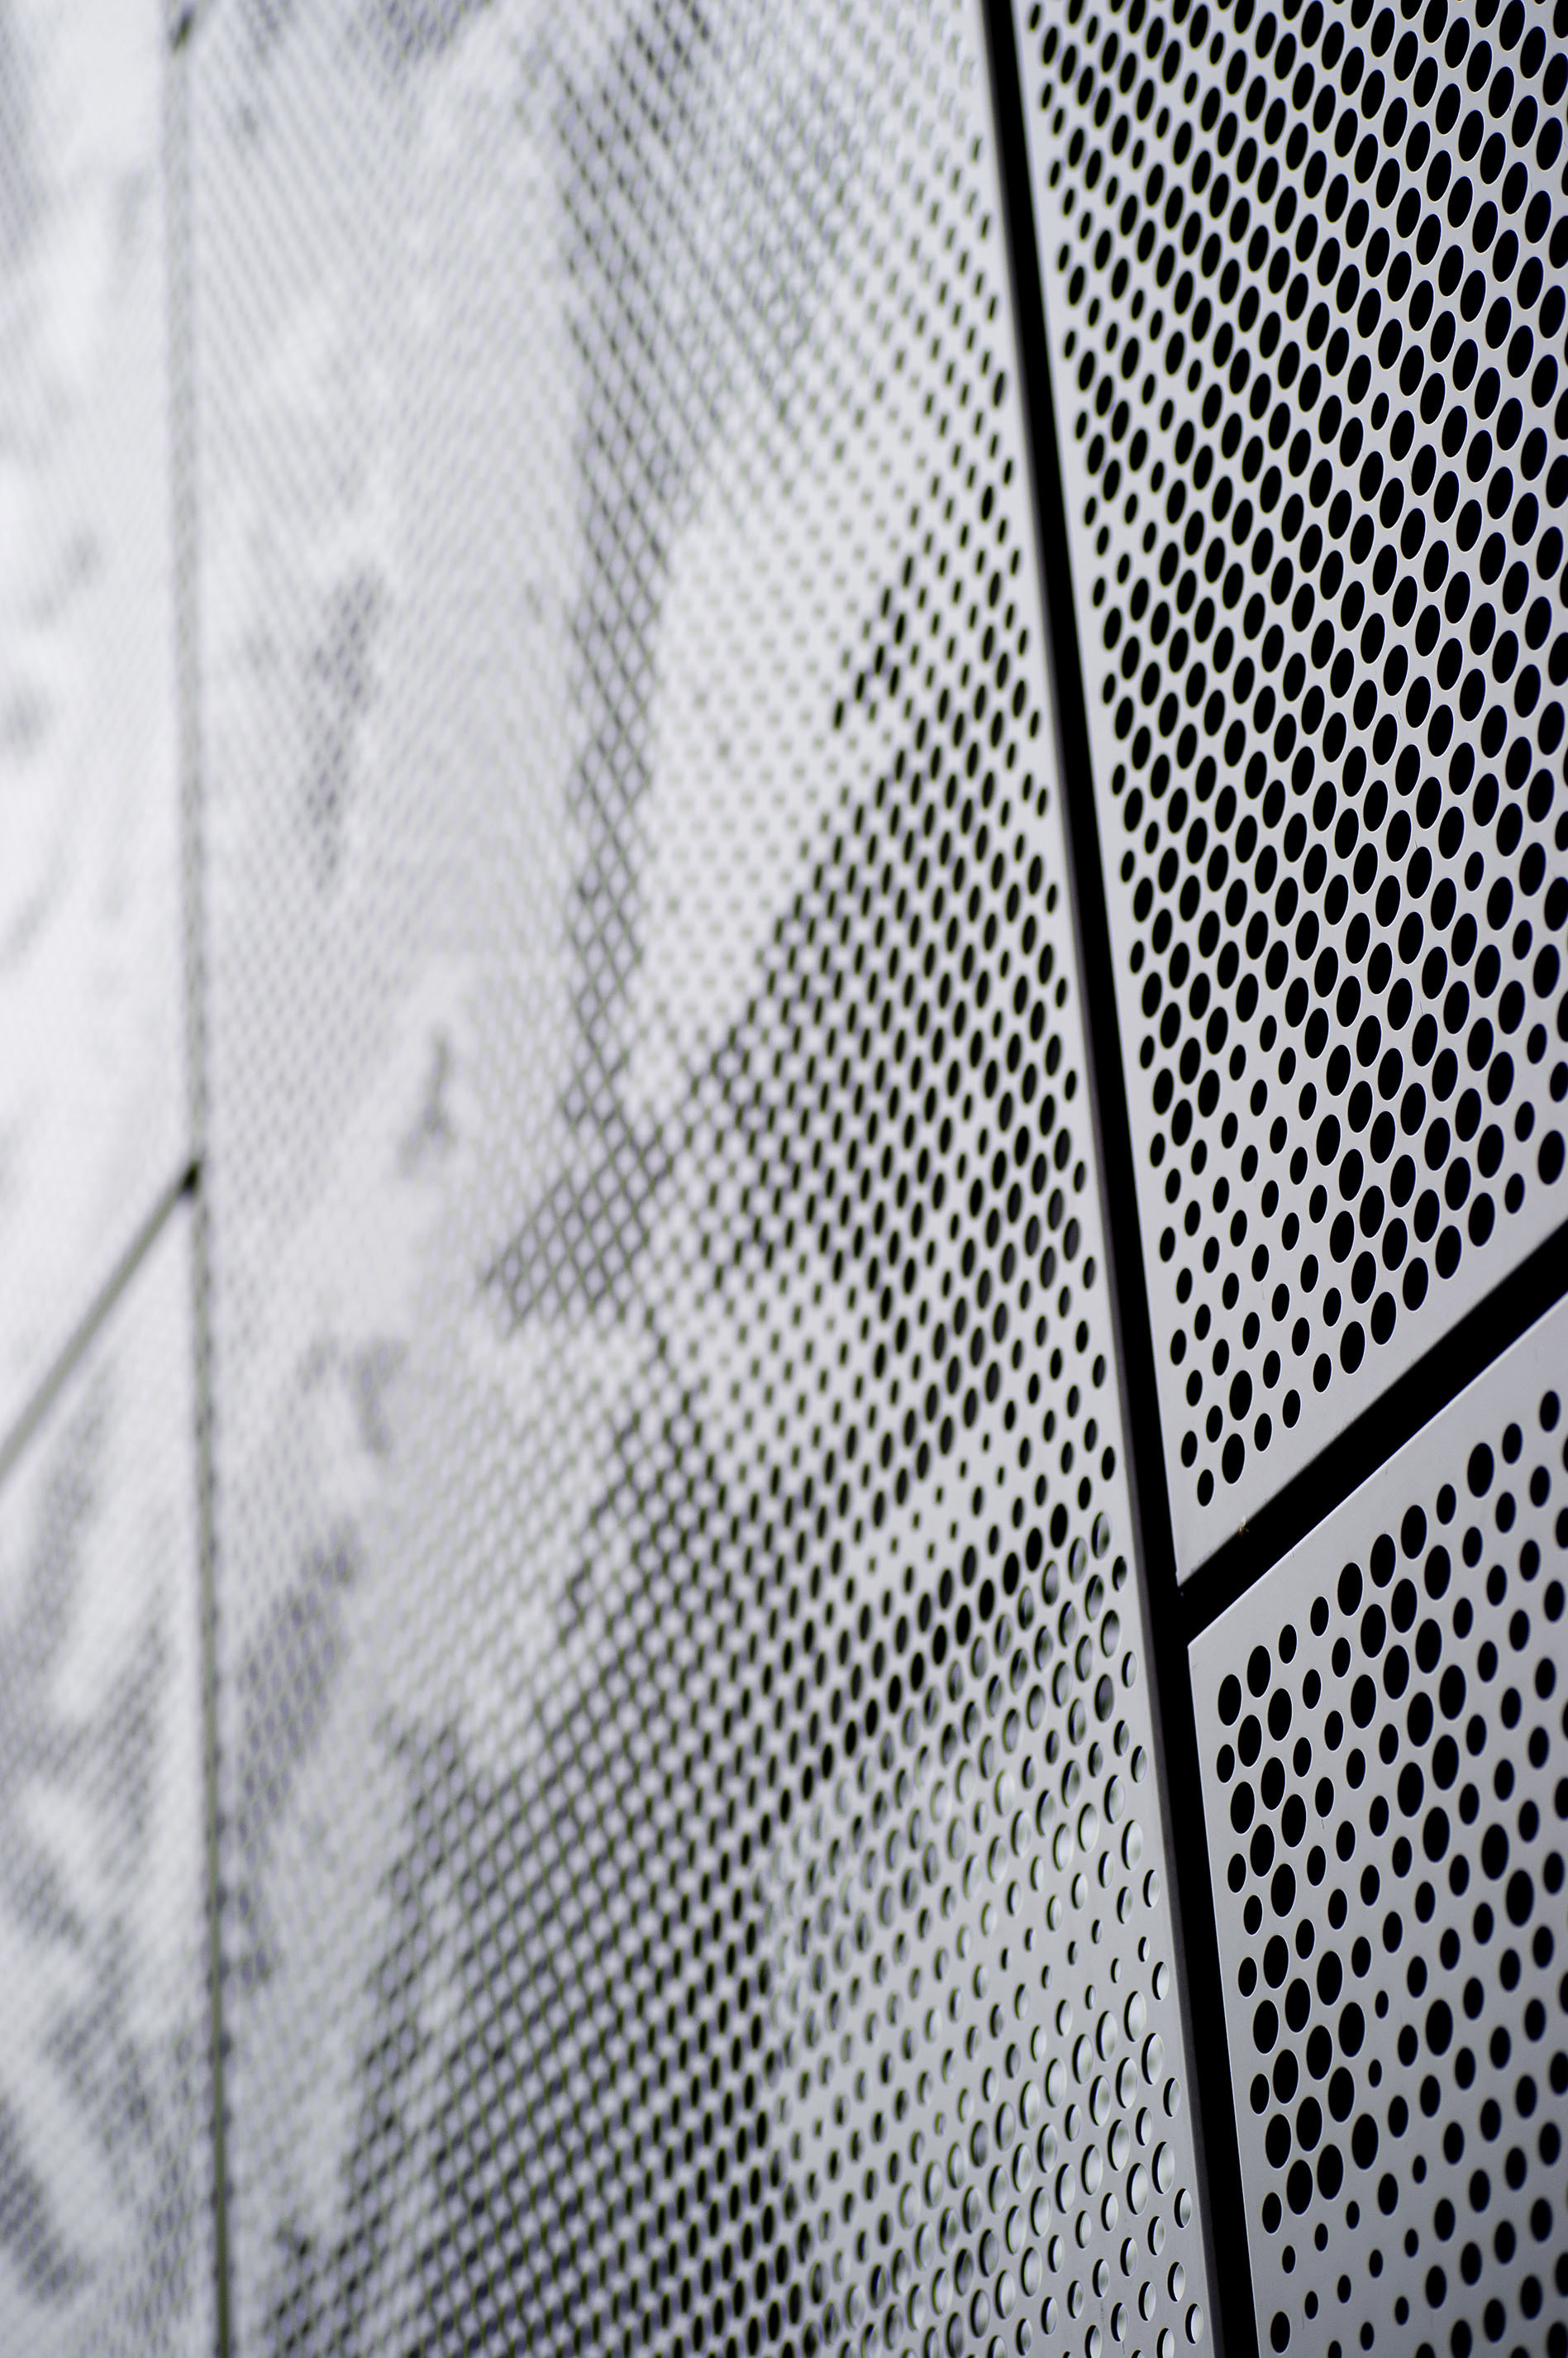 Habillage de façade en aluminium chez Delhez